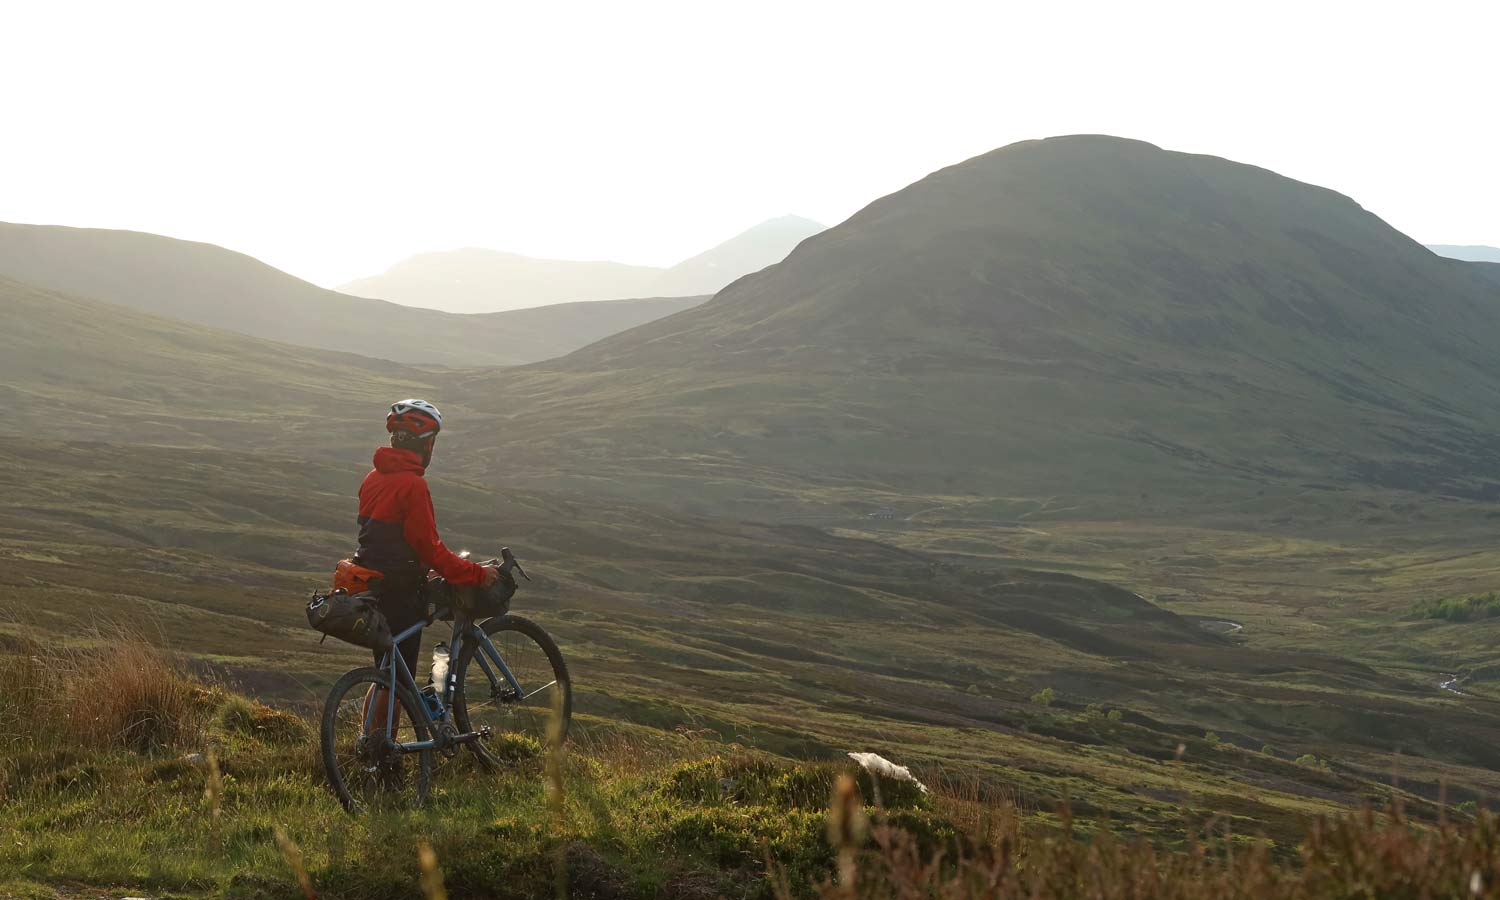 Drovers, Bikepacking Scotland, PerthshireGravel.com, film by Markus Stitz